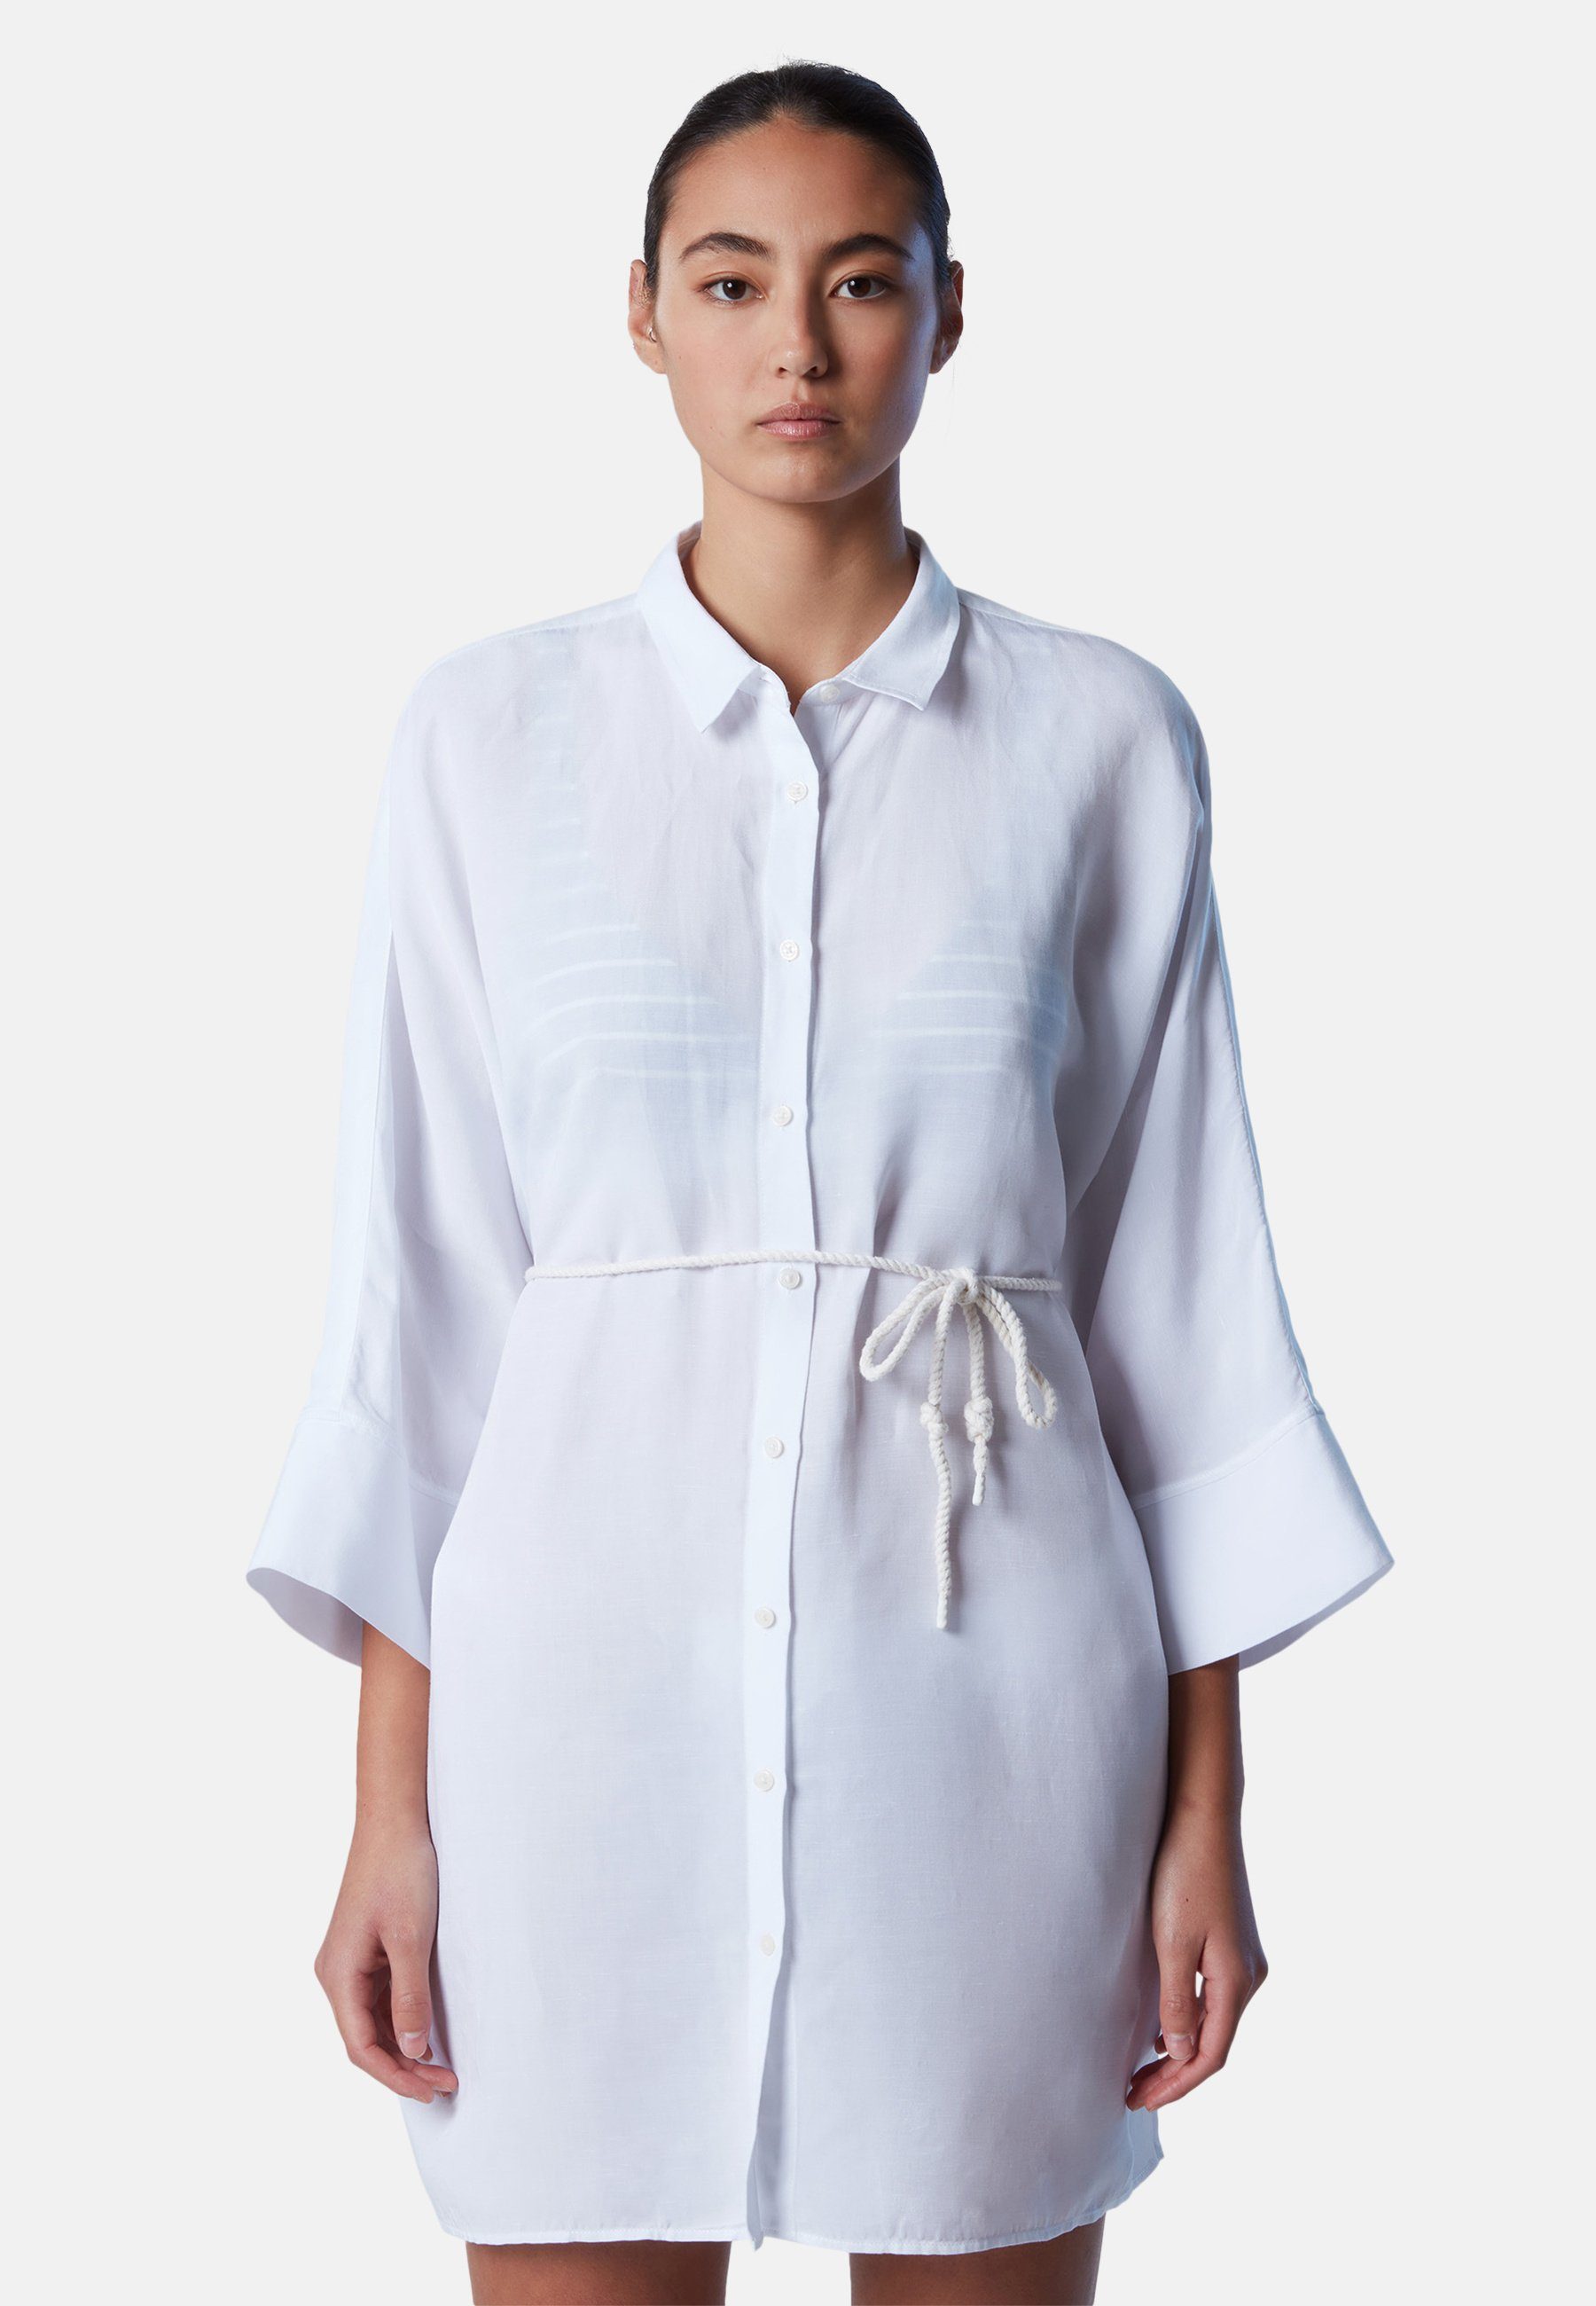 Versandhandel usw. North Sails White Shirtkleid Design Kimono-Hemdblusenkleid klassischem mit